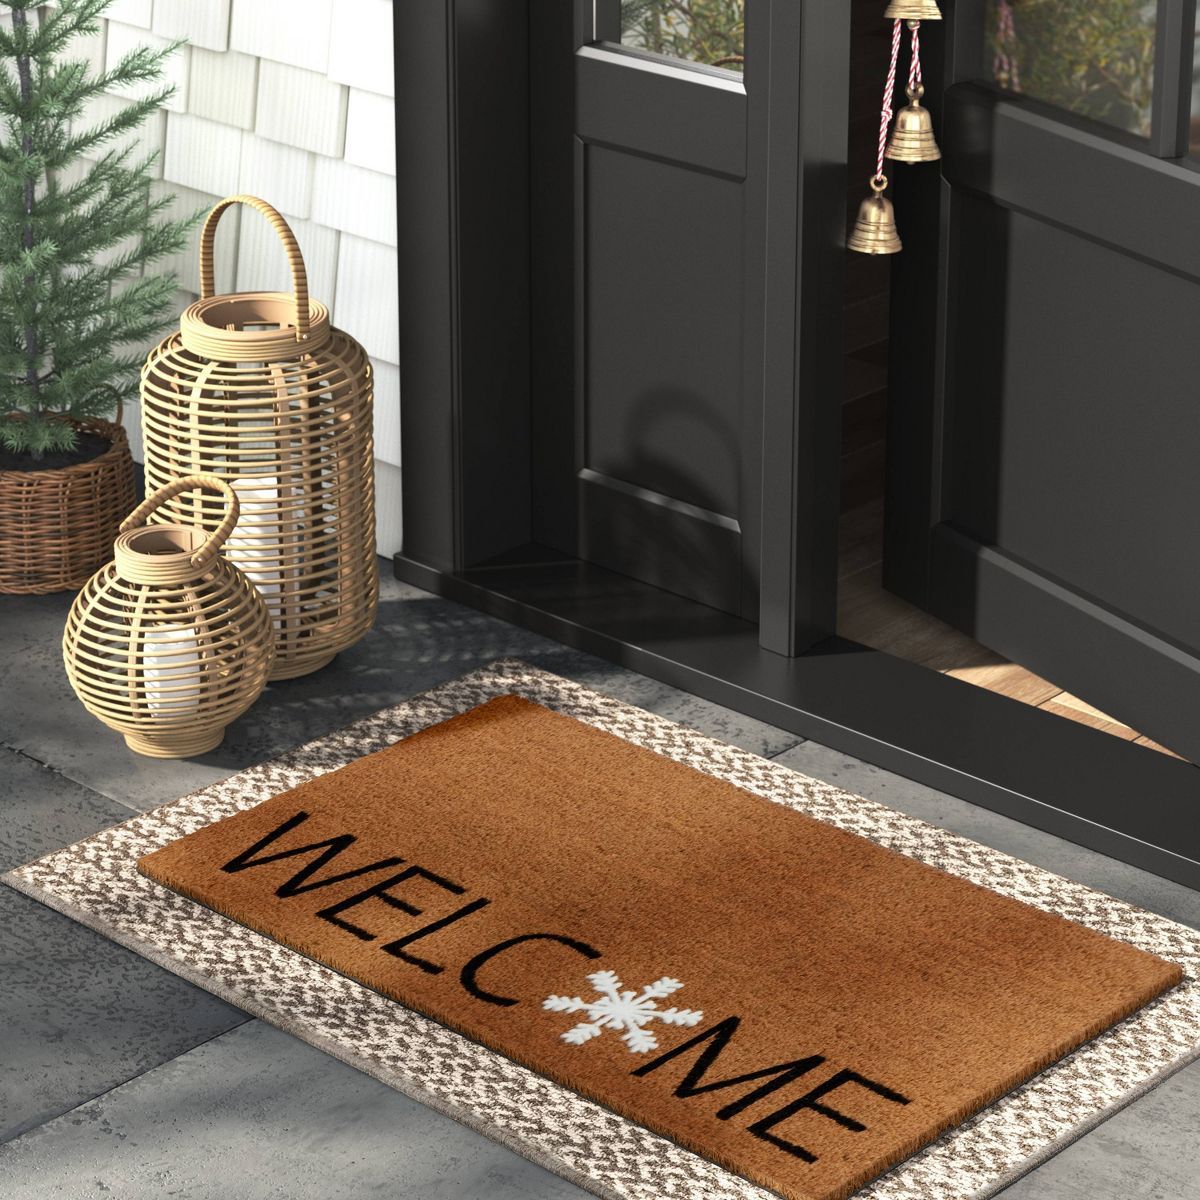 1'6"x2'6" 'Welcome' Snowflake Coir Christmas Doormat Black/White - Threshold™ | Target